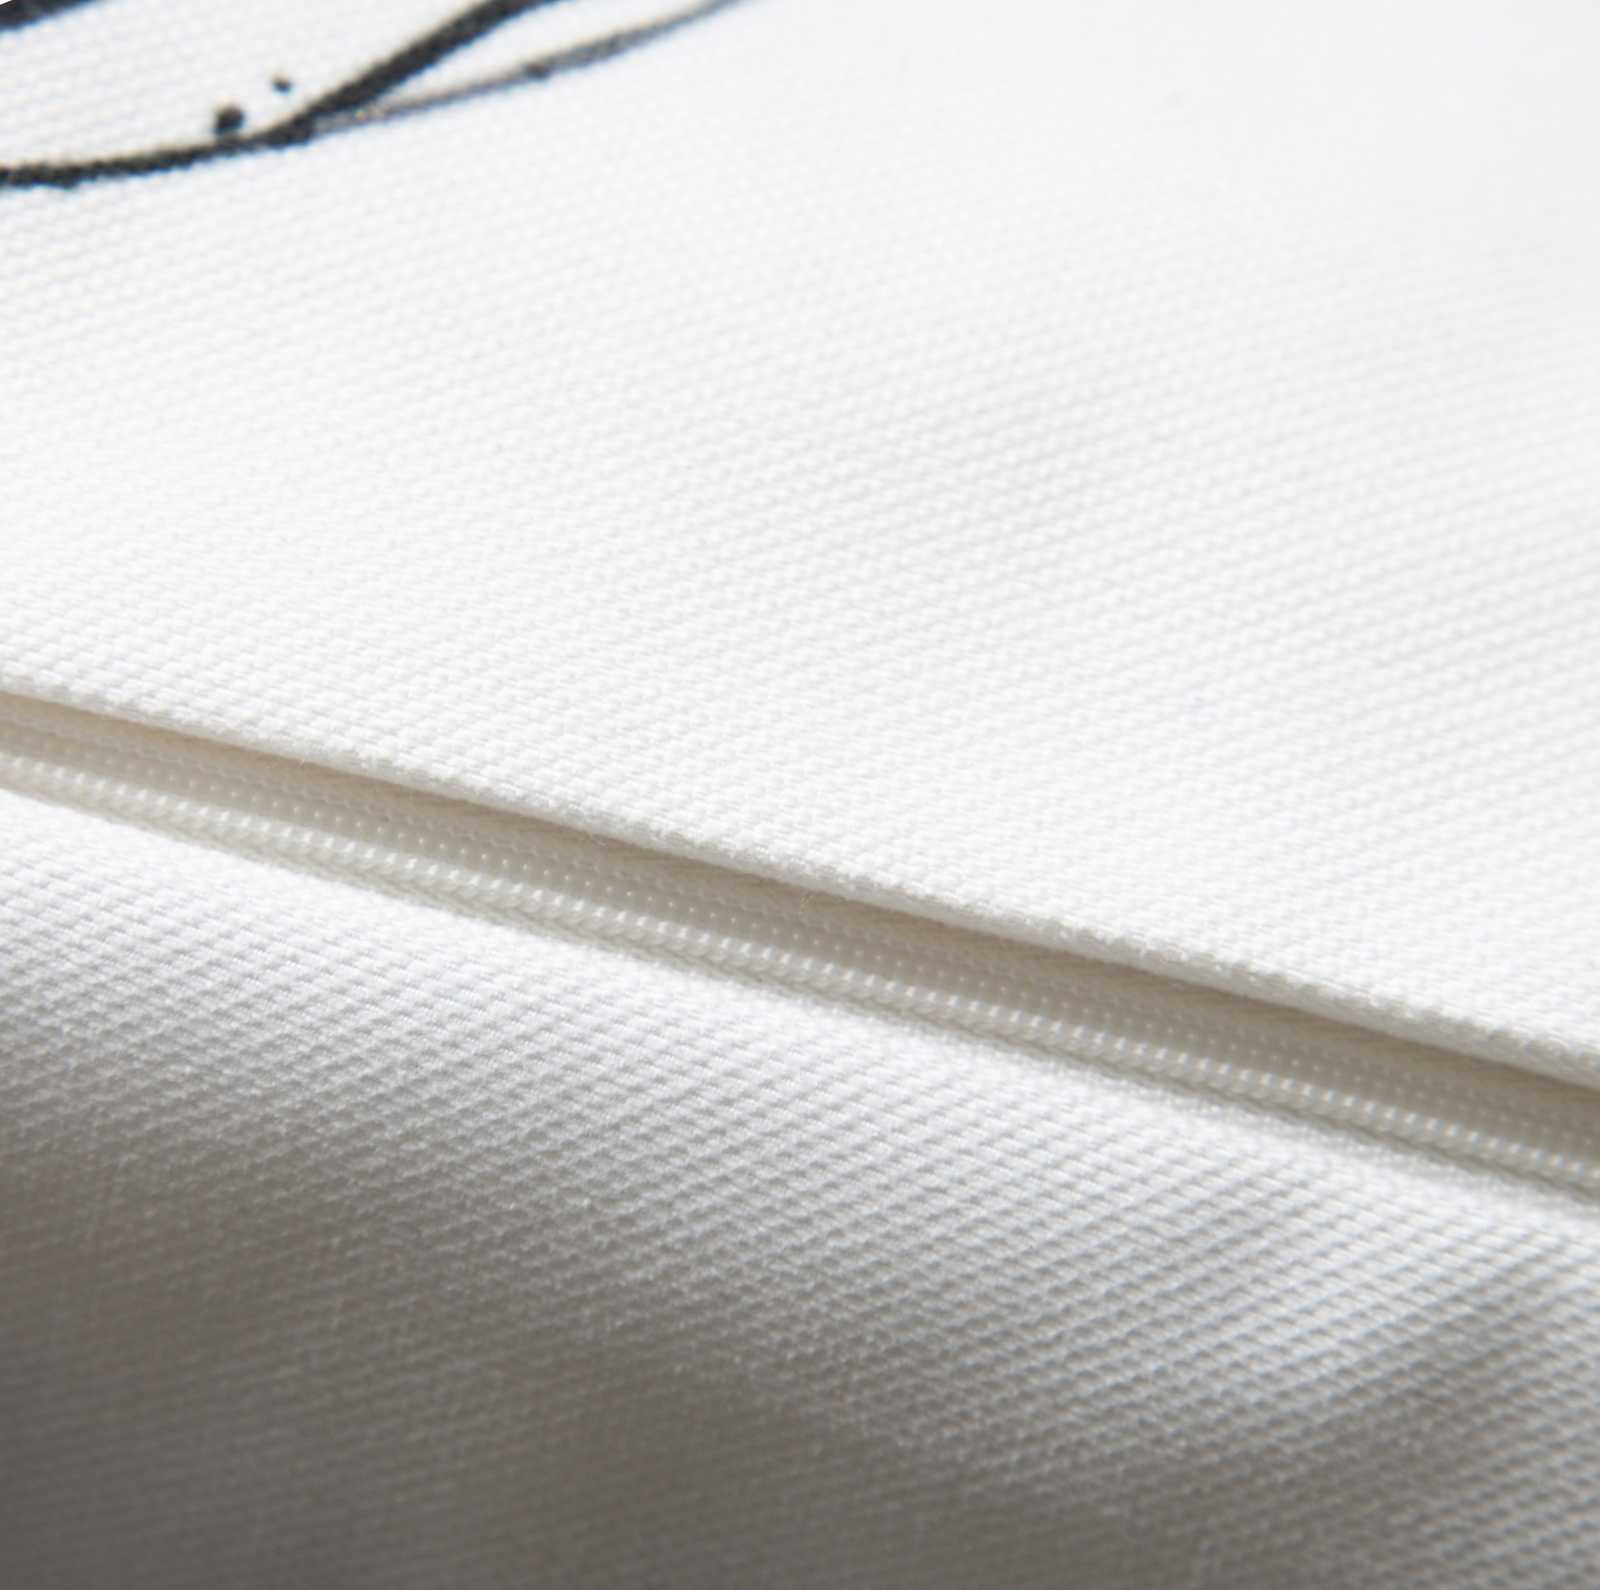             Cushion cover black and white "Koi 3», 45x45cm
        